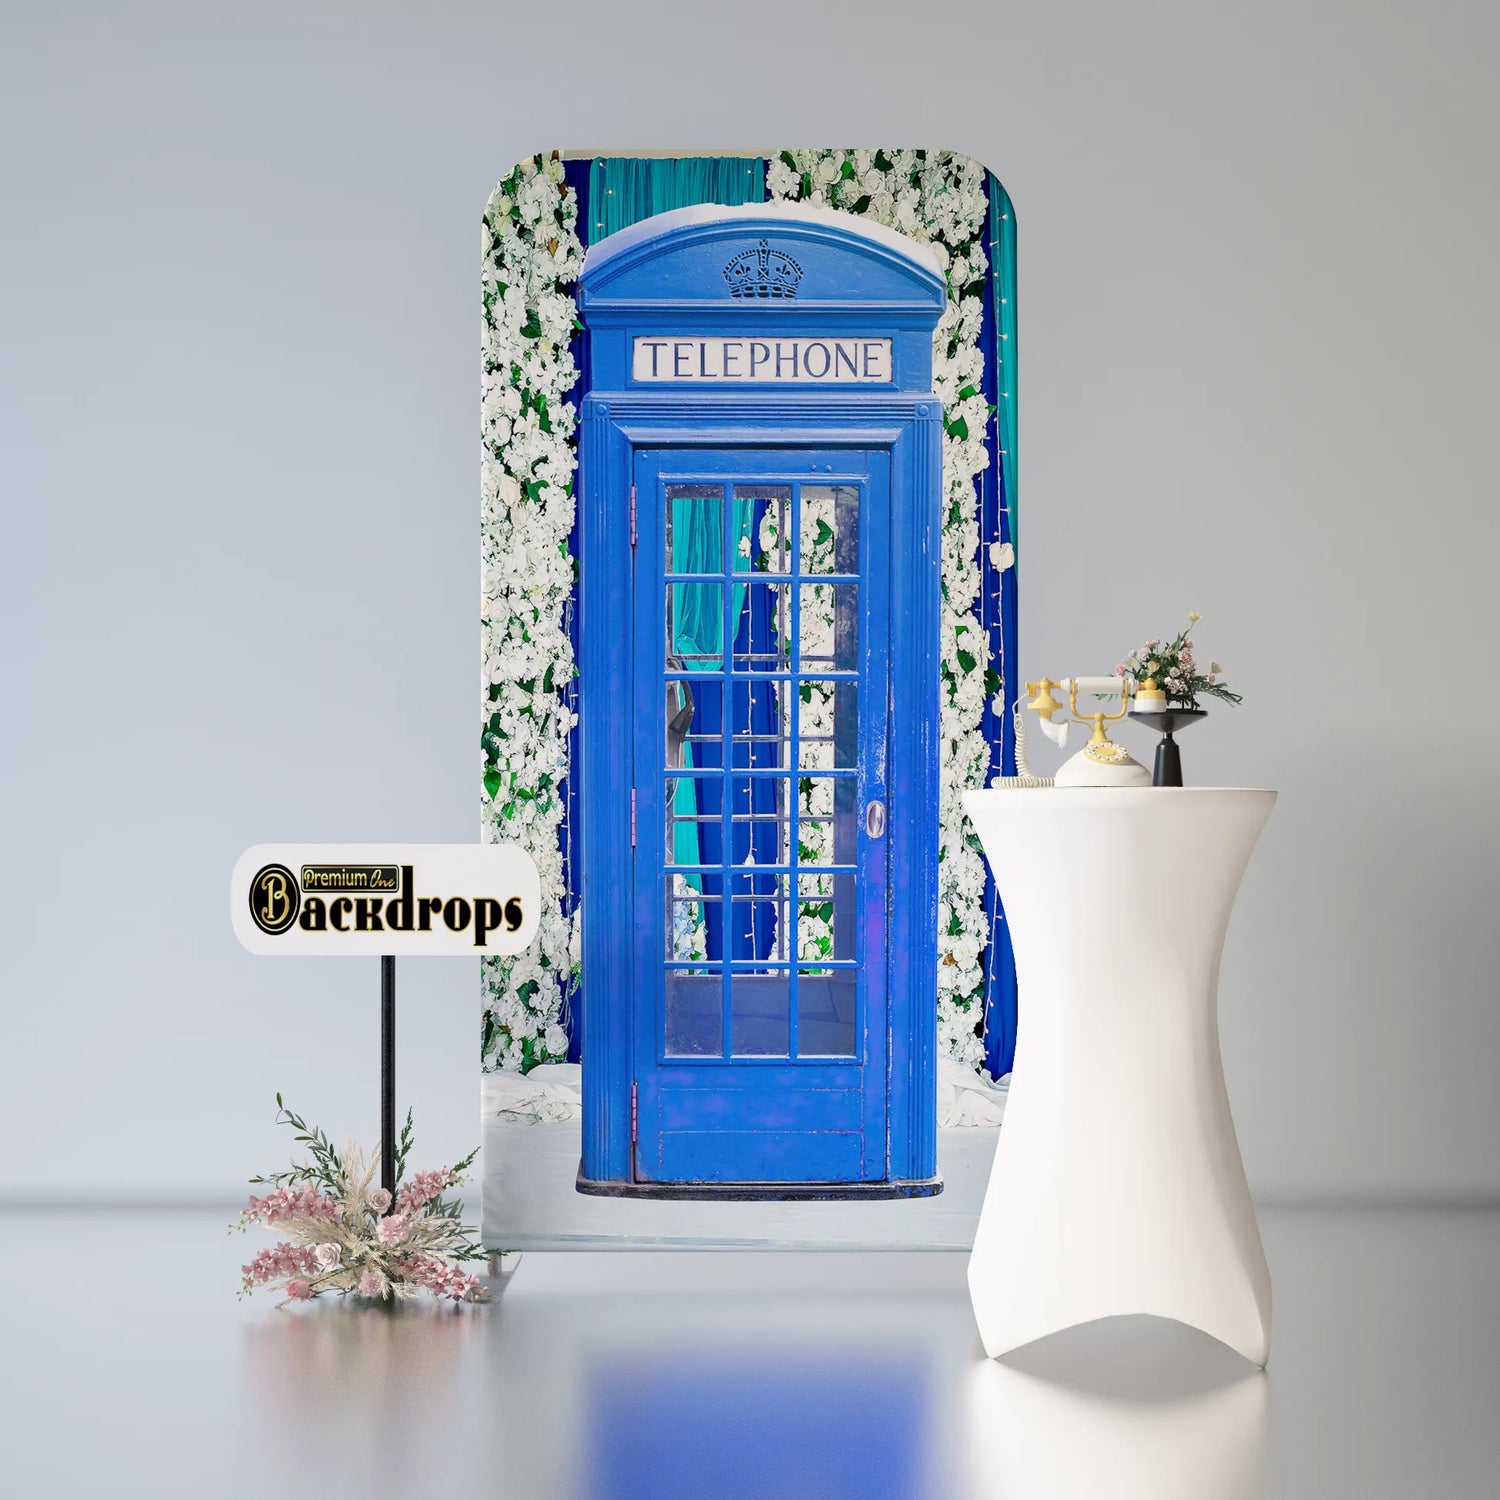 Telephone Booth Design 33